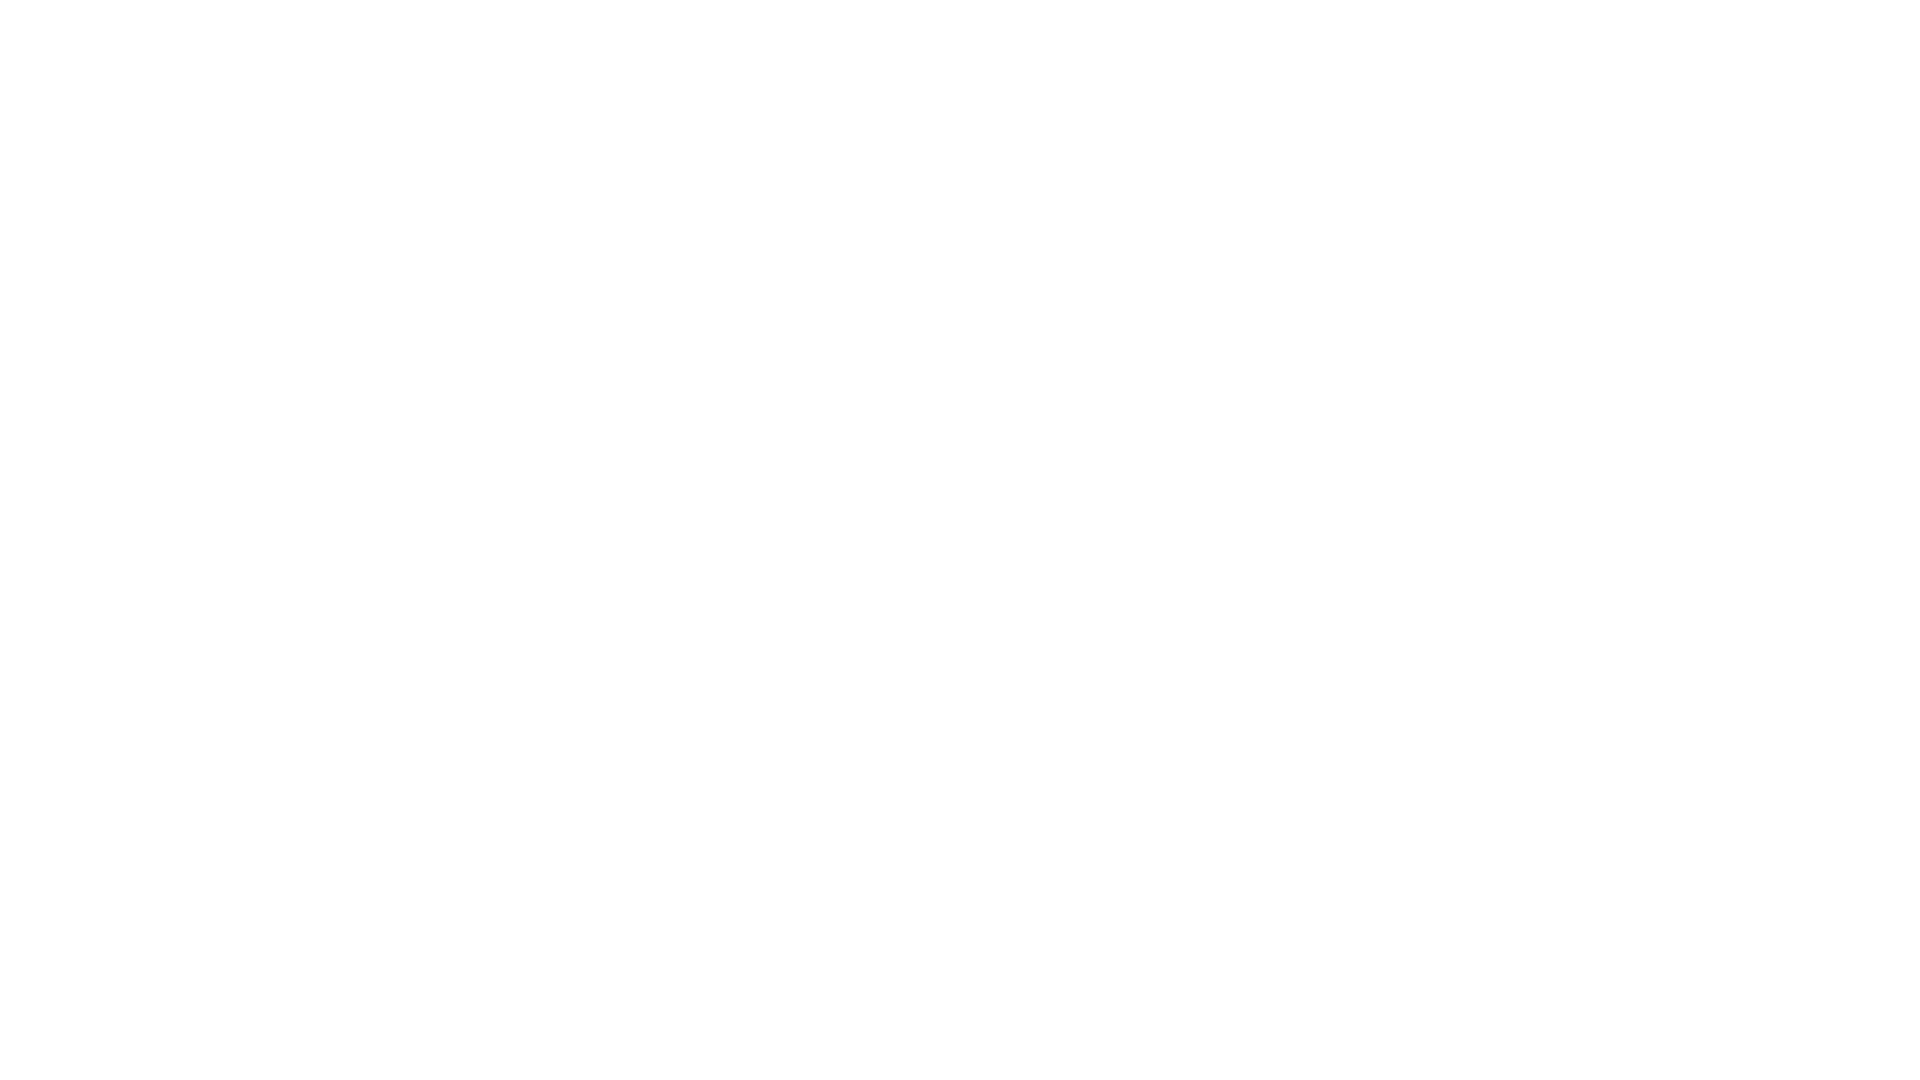 DocsMX OFFICIAL SELECTION 2019